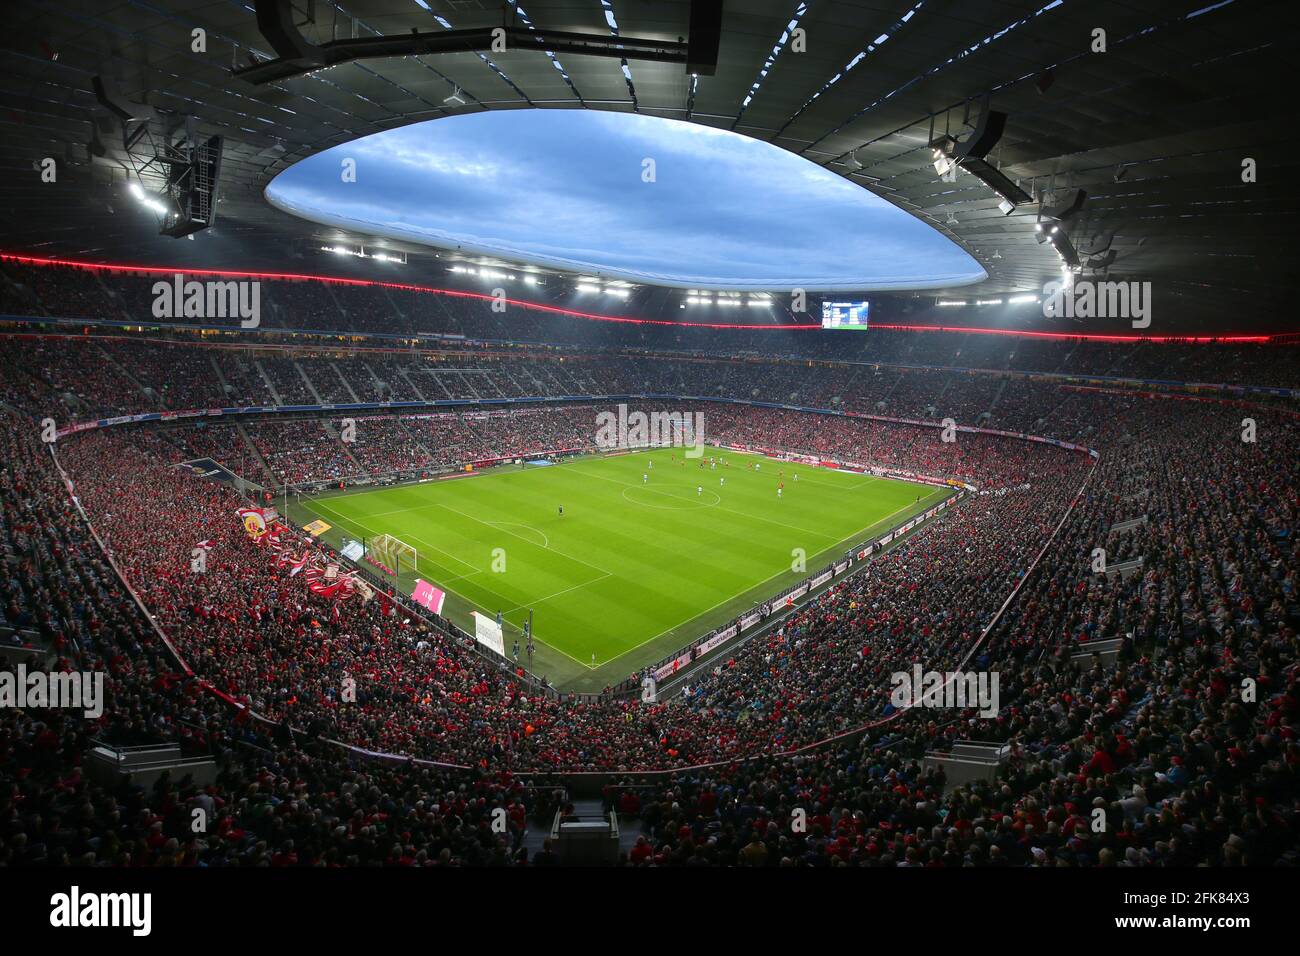 Stadion Allianz Arena in Muenchen Froettmaning for the UEFA Euro 2020 / 2021 football European Championship   Football Stadium from FC Bayern Munich  © diebilderwelt / Alamy Stock Stock Photo